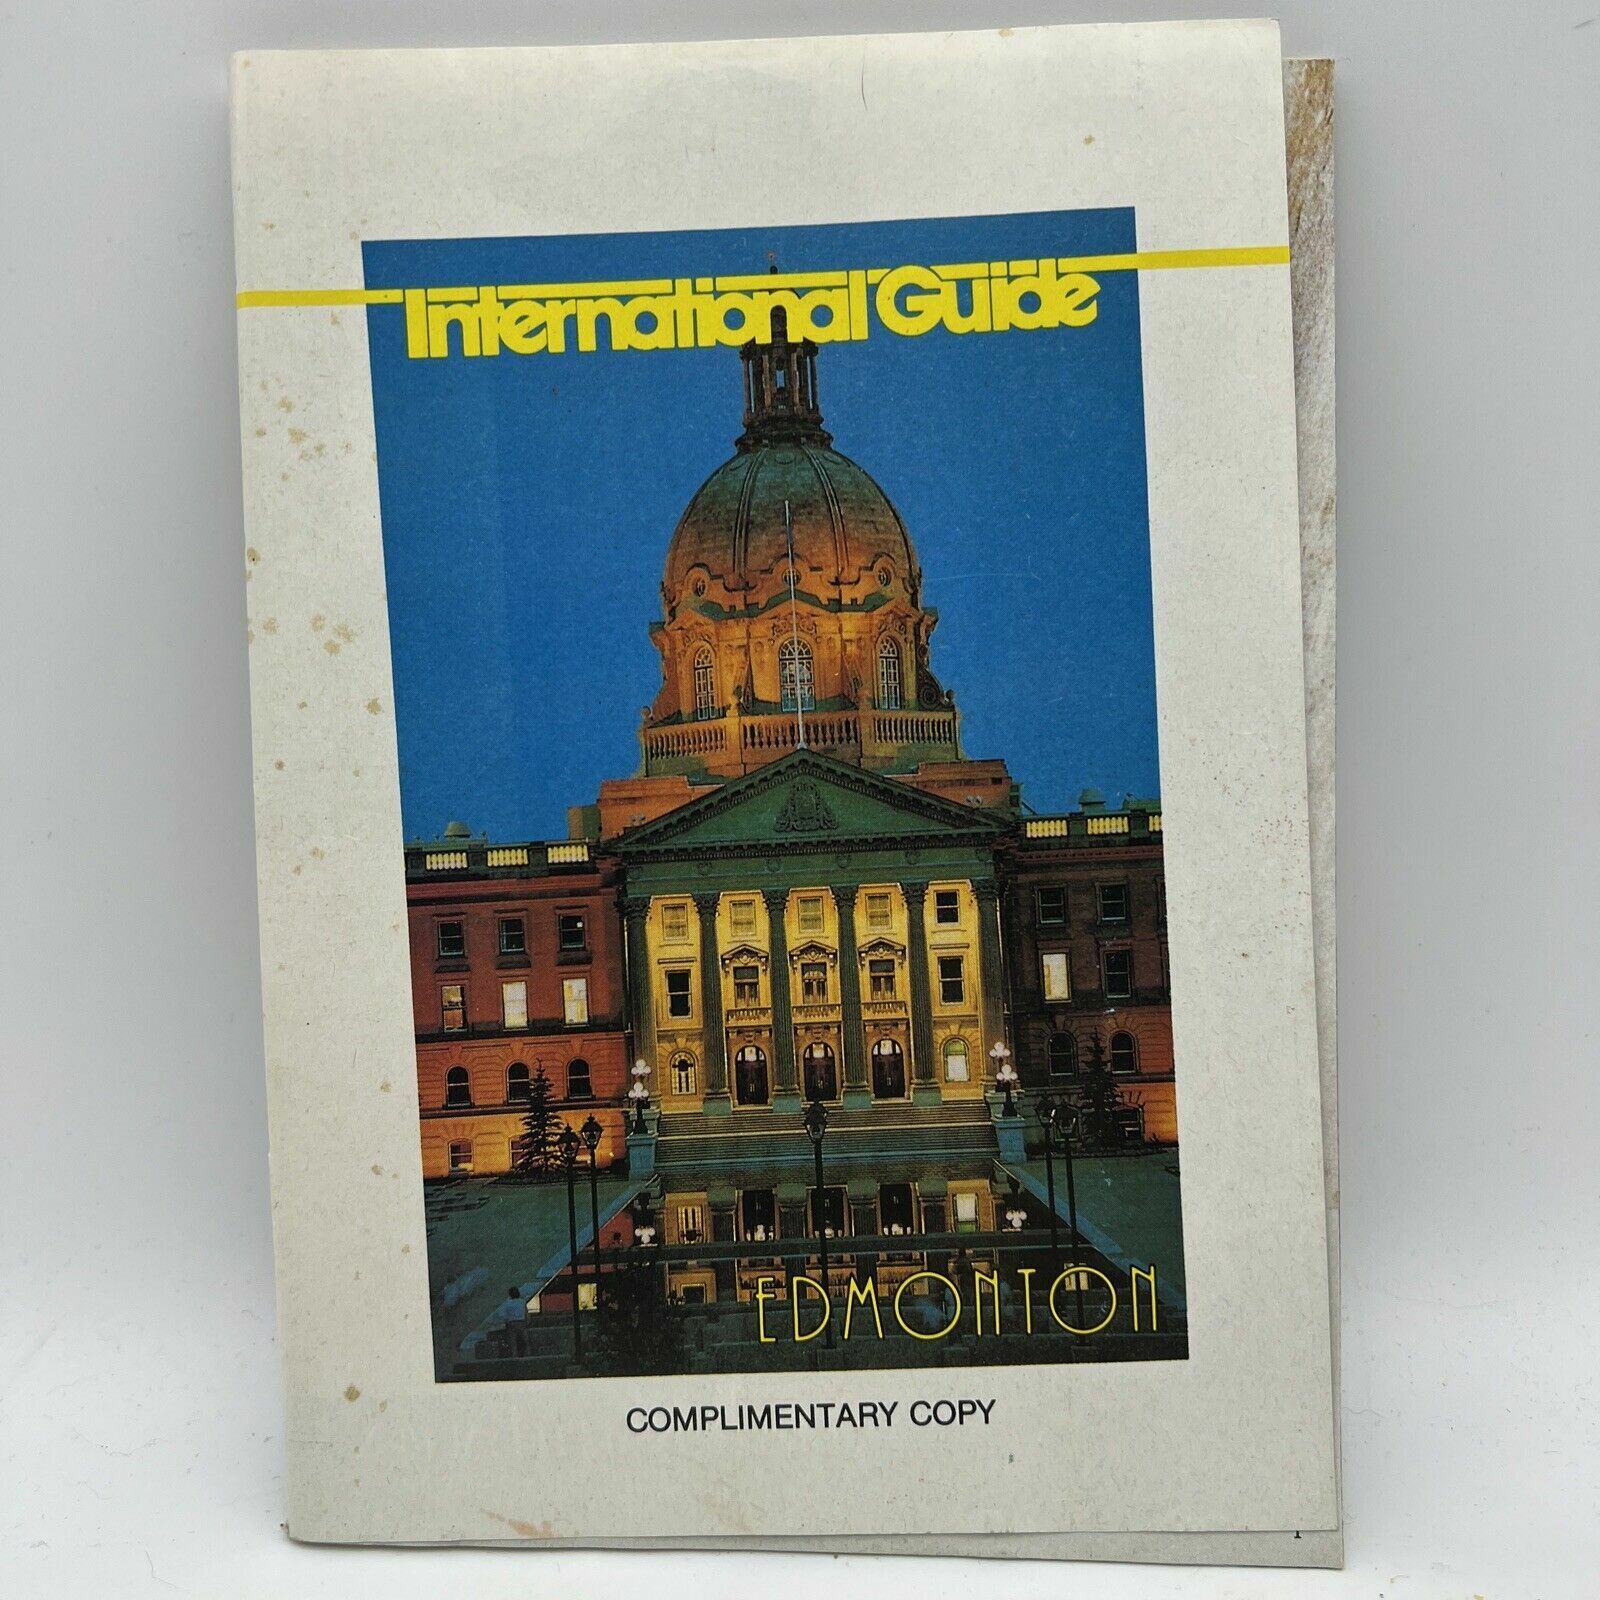 1987 EDMONTON ALBERTA INTERNATIONAL GUIDE Tourist Travel Tour Booklet and Map